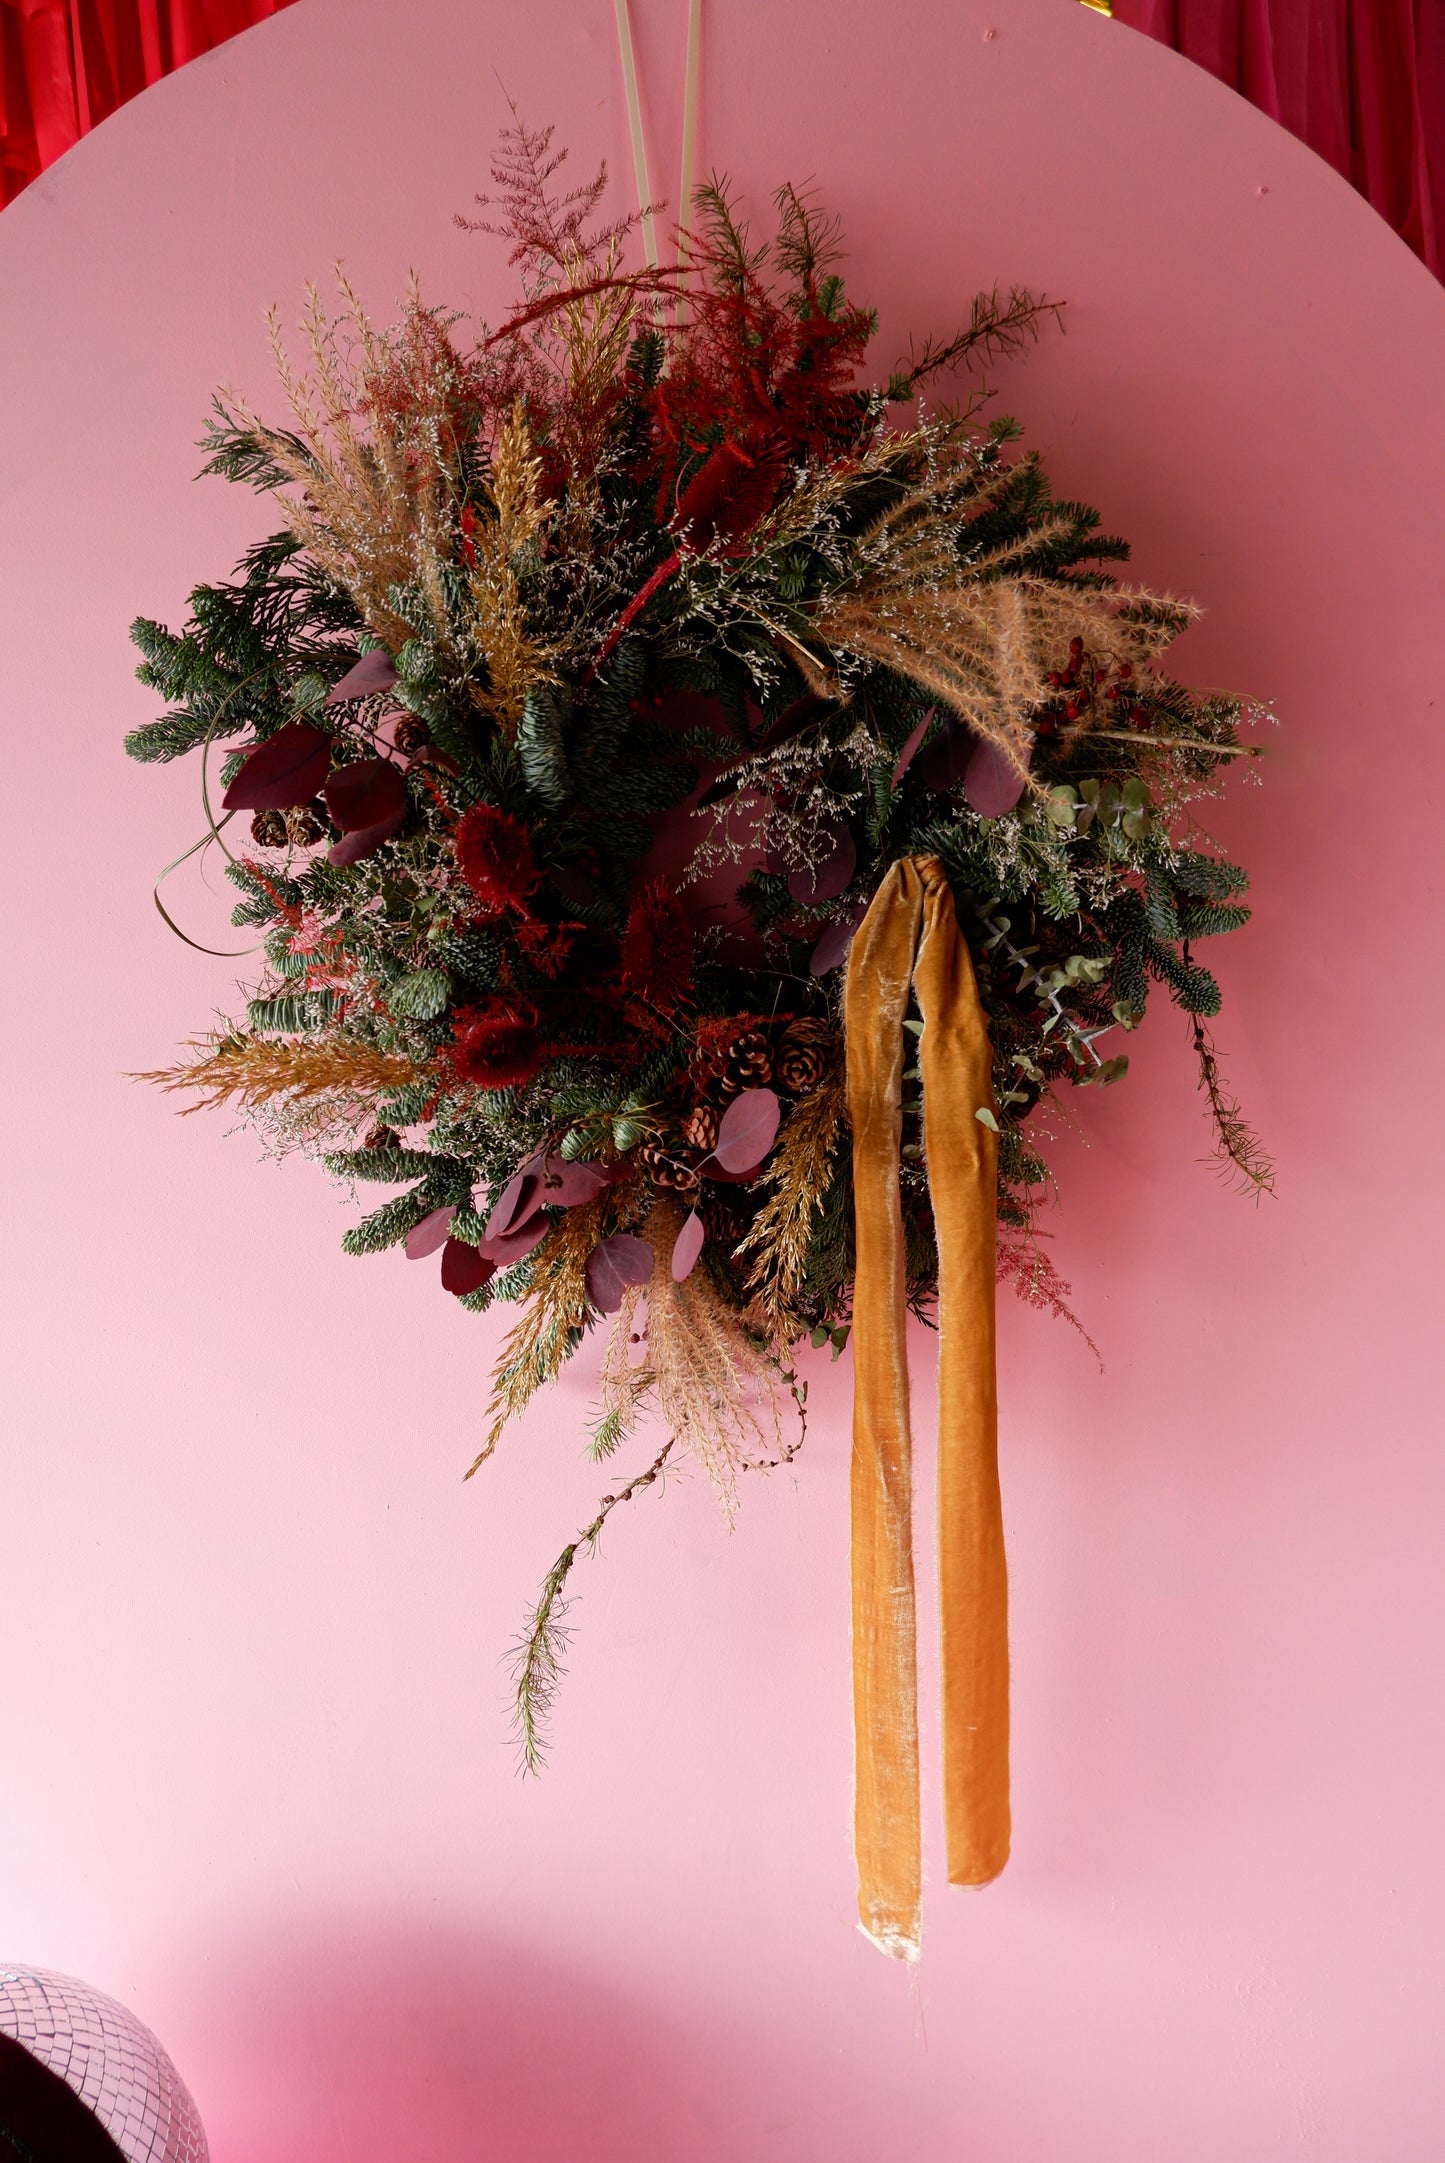 PREORDER ‘A-wreath-a Franklin’ Deluxe Wreath